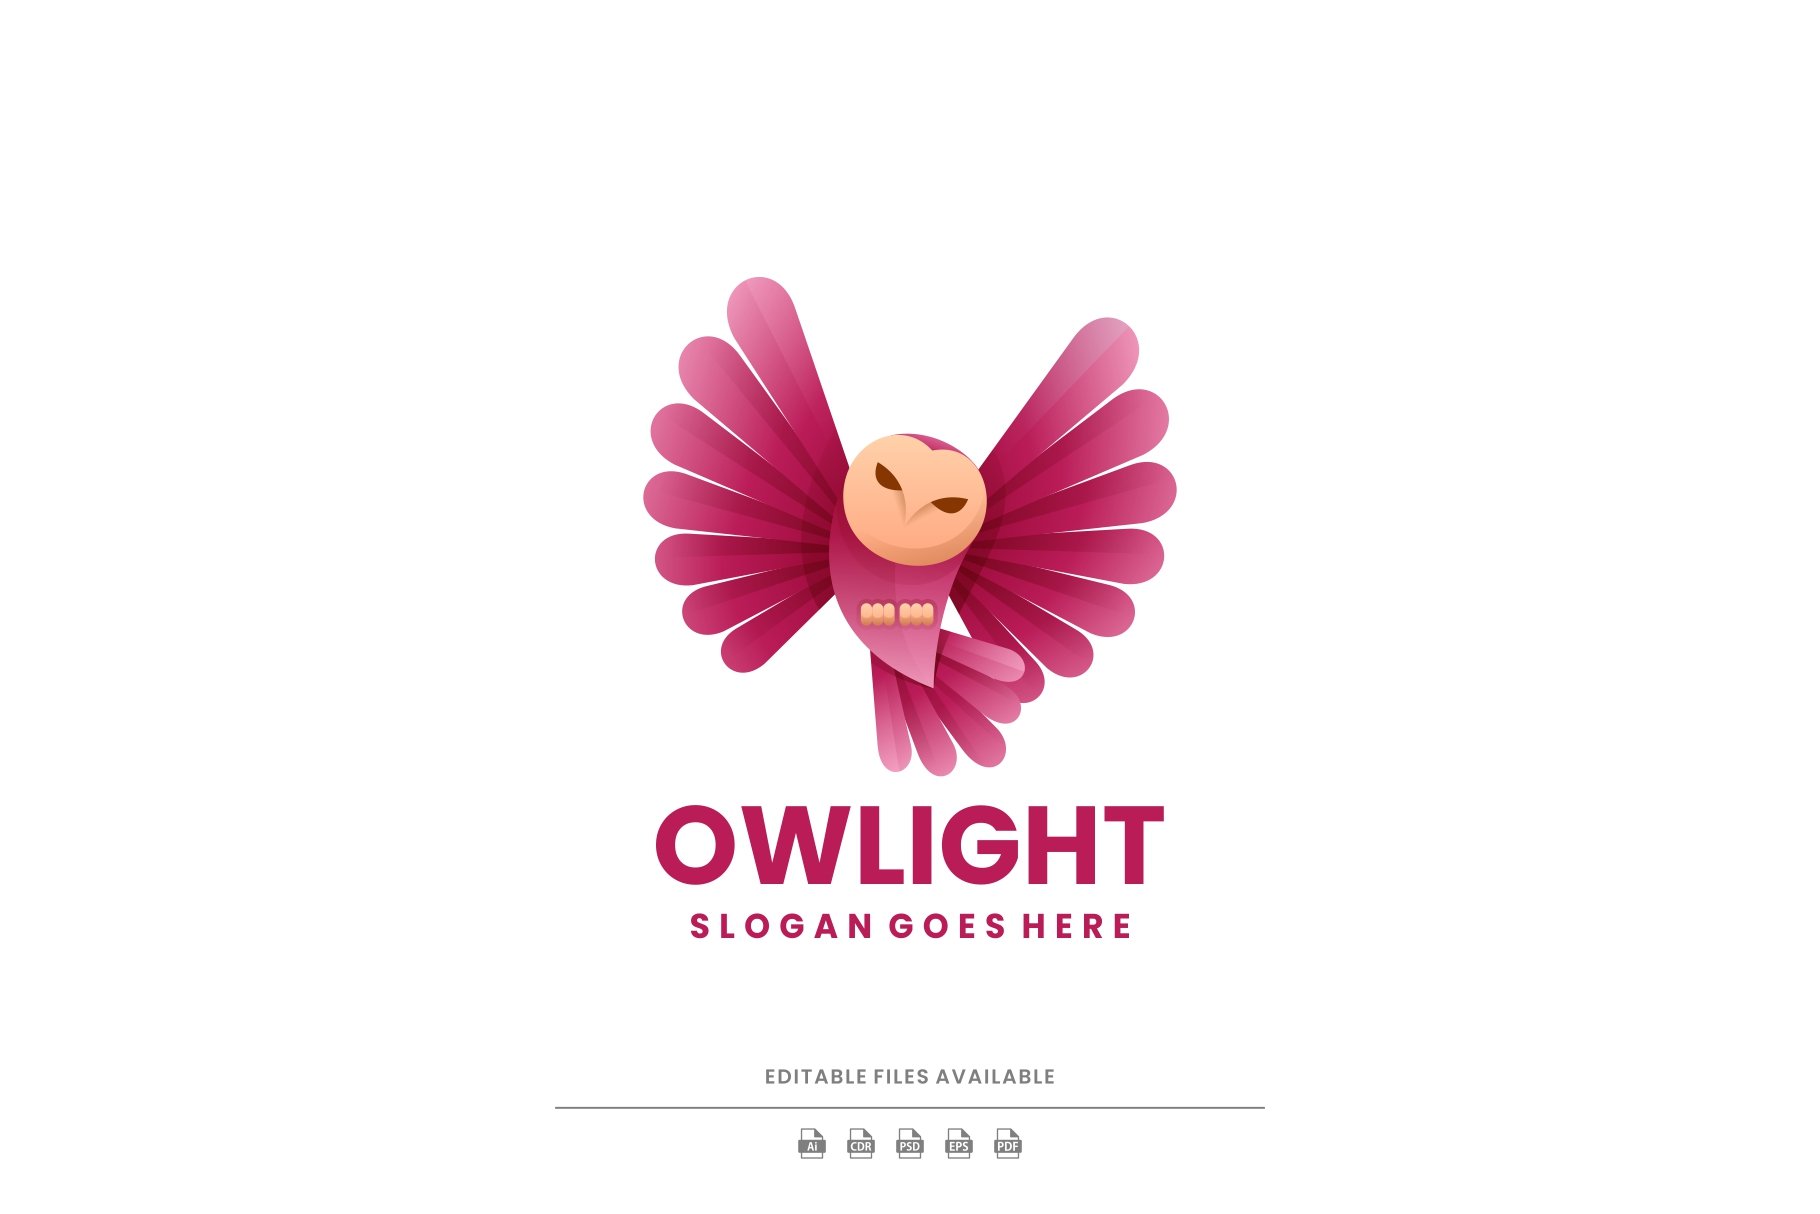 Owl Light Gradient Logo cover image.